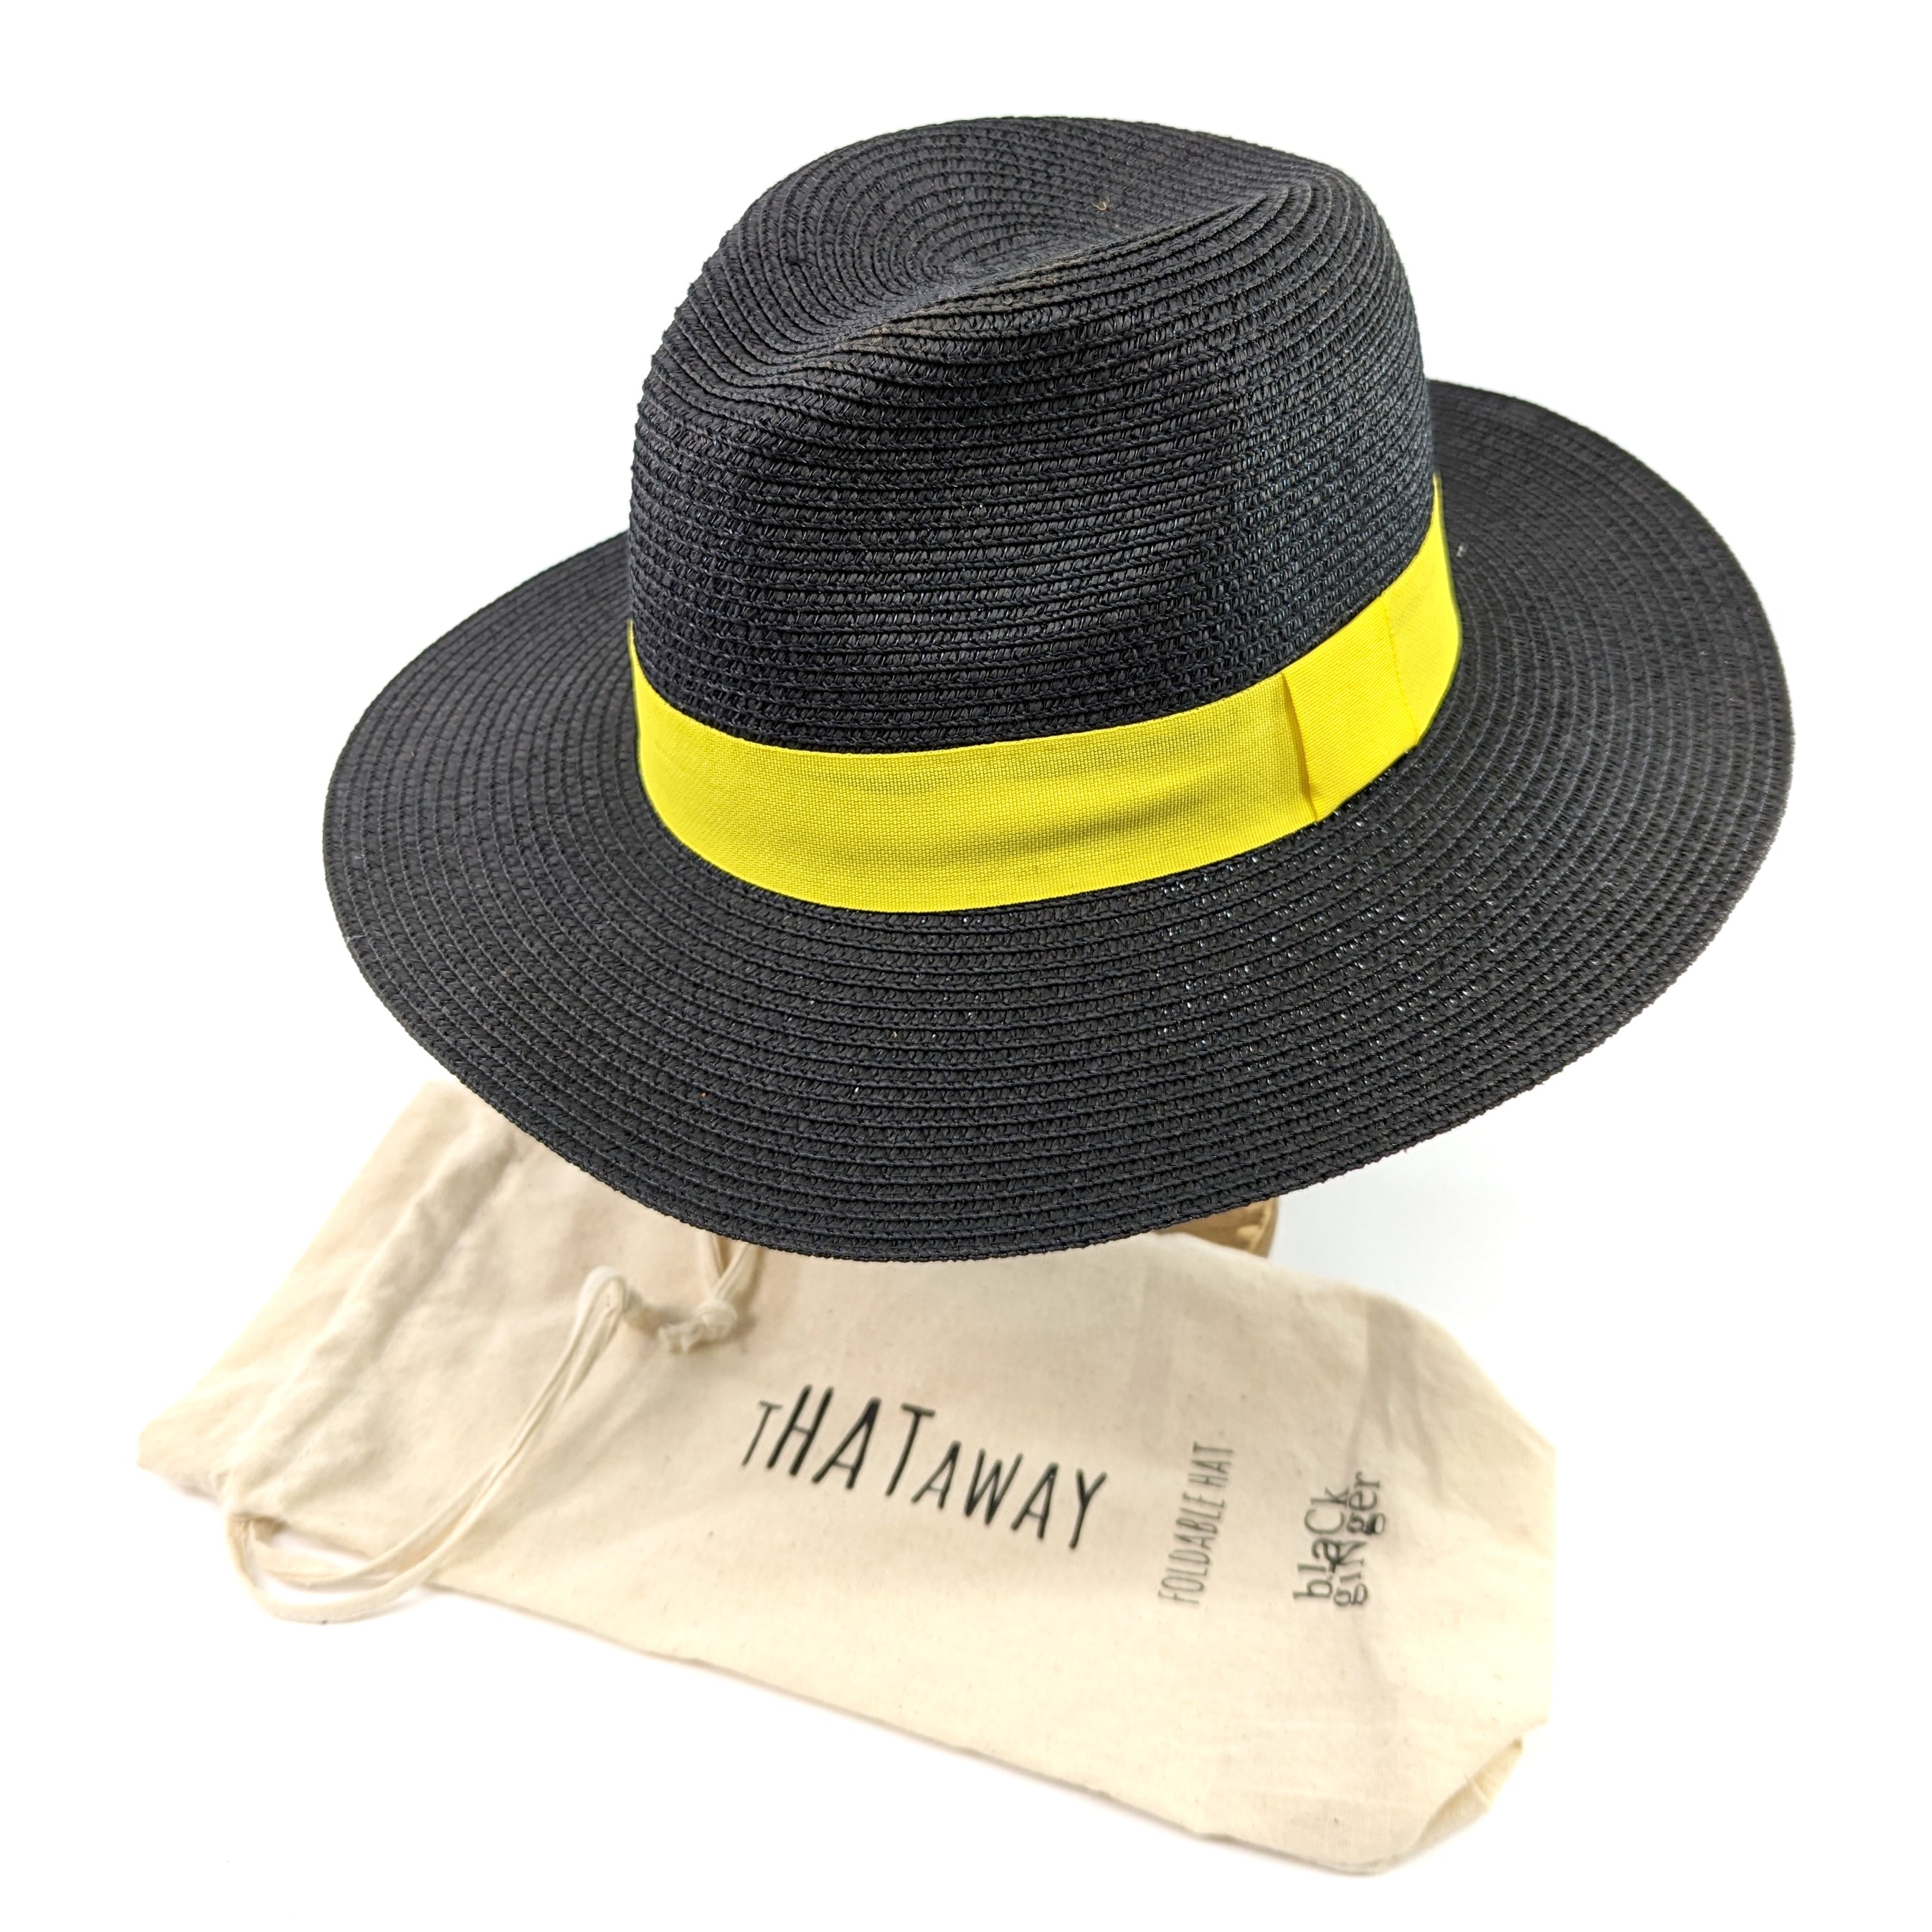 Folding Panama Style Travel Sun Hat - Black & Yellow (57cm)